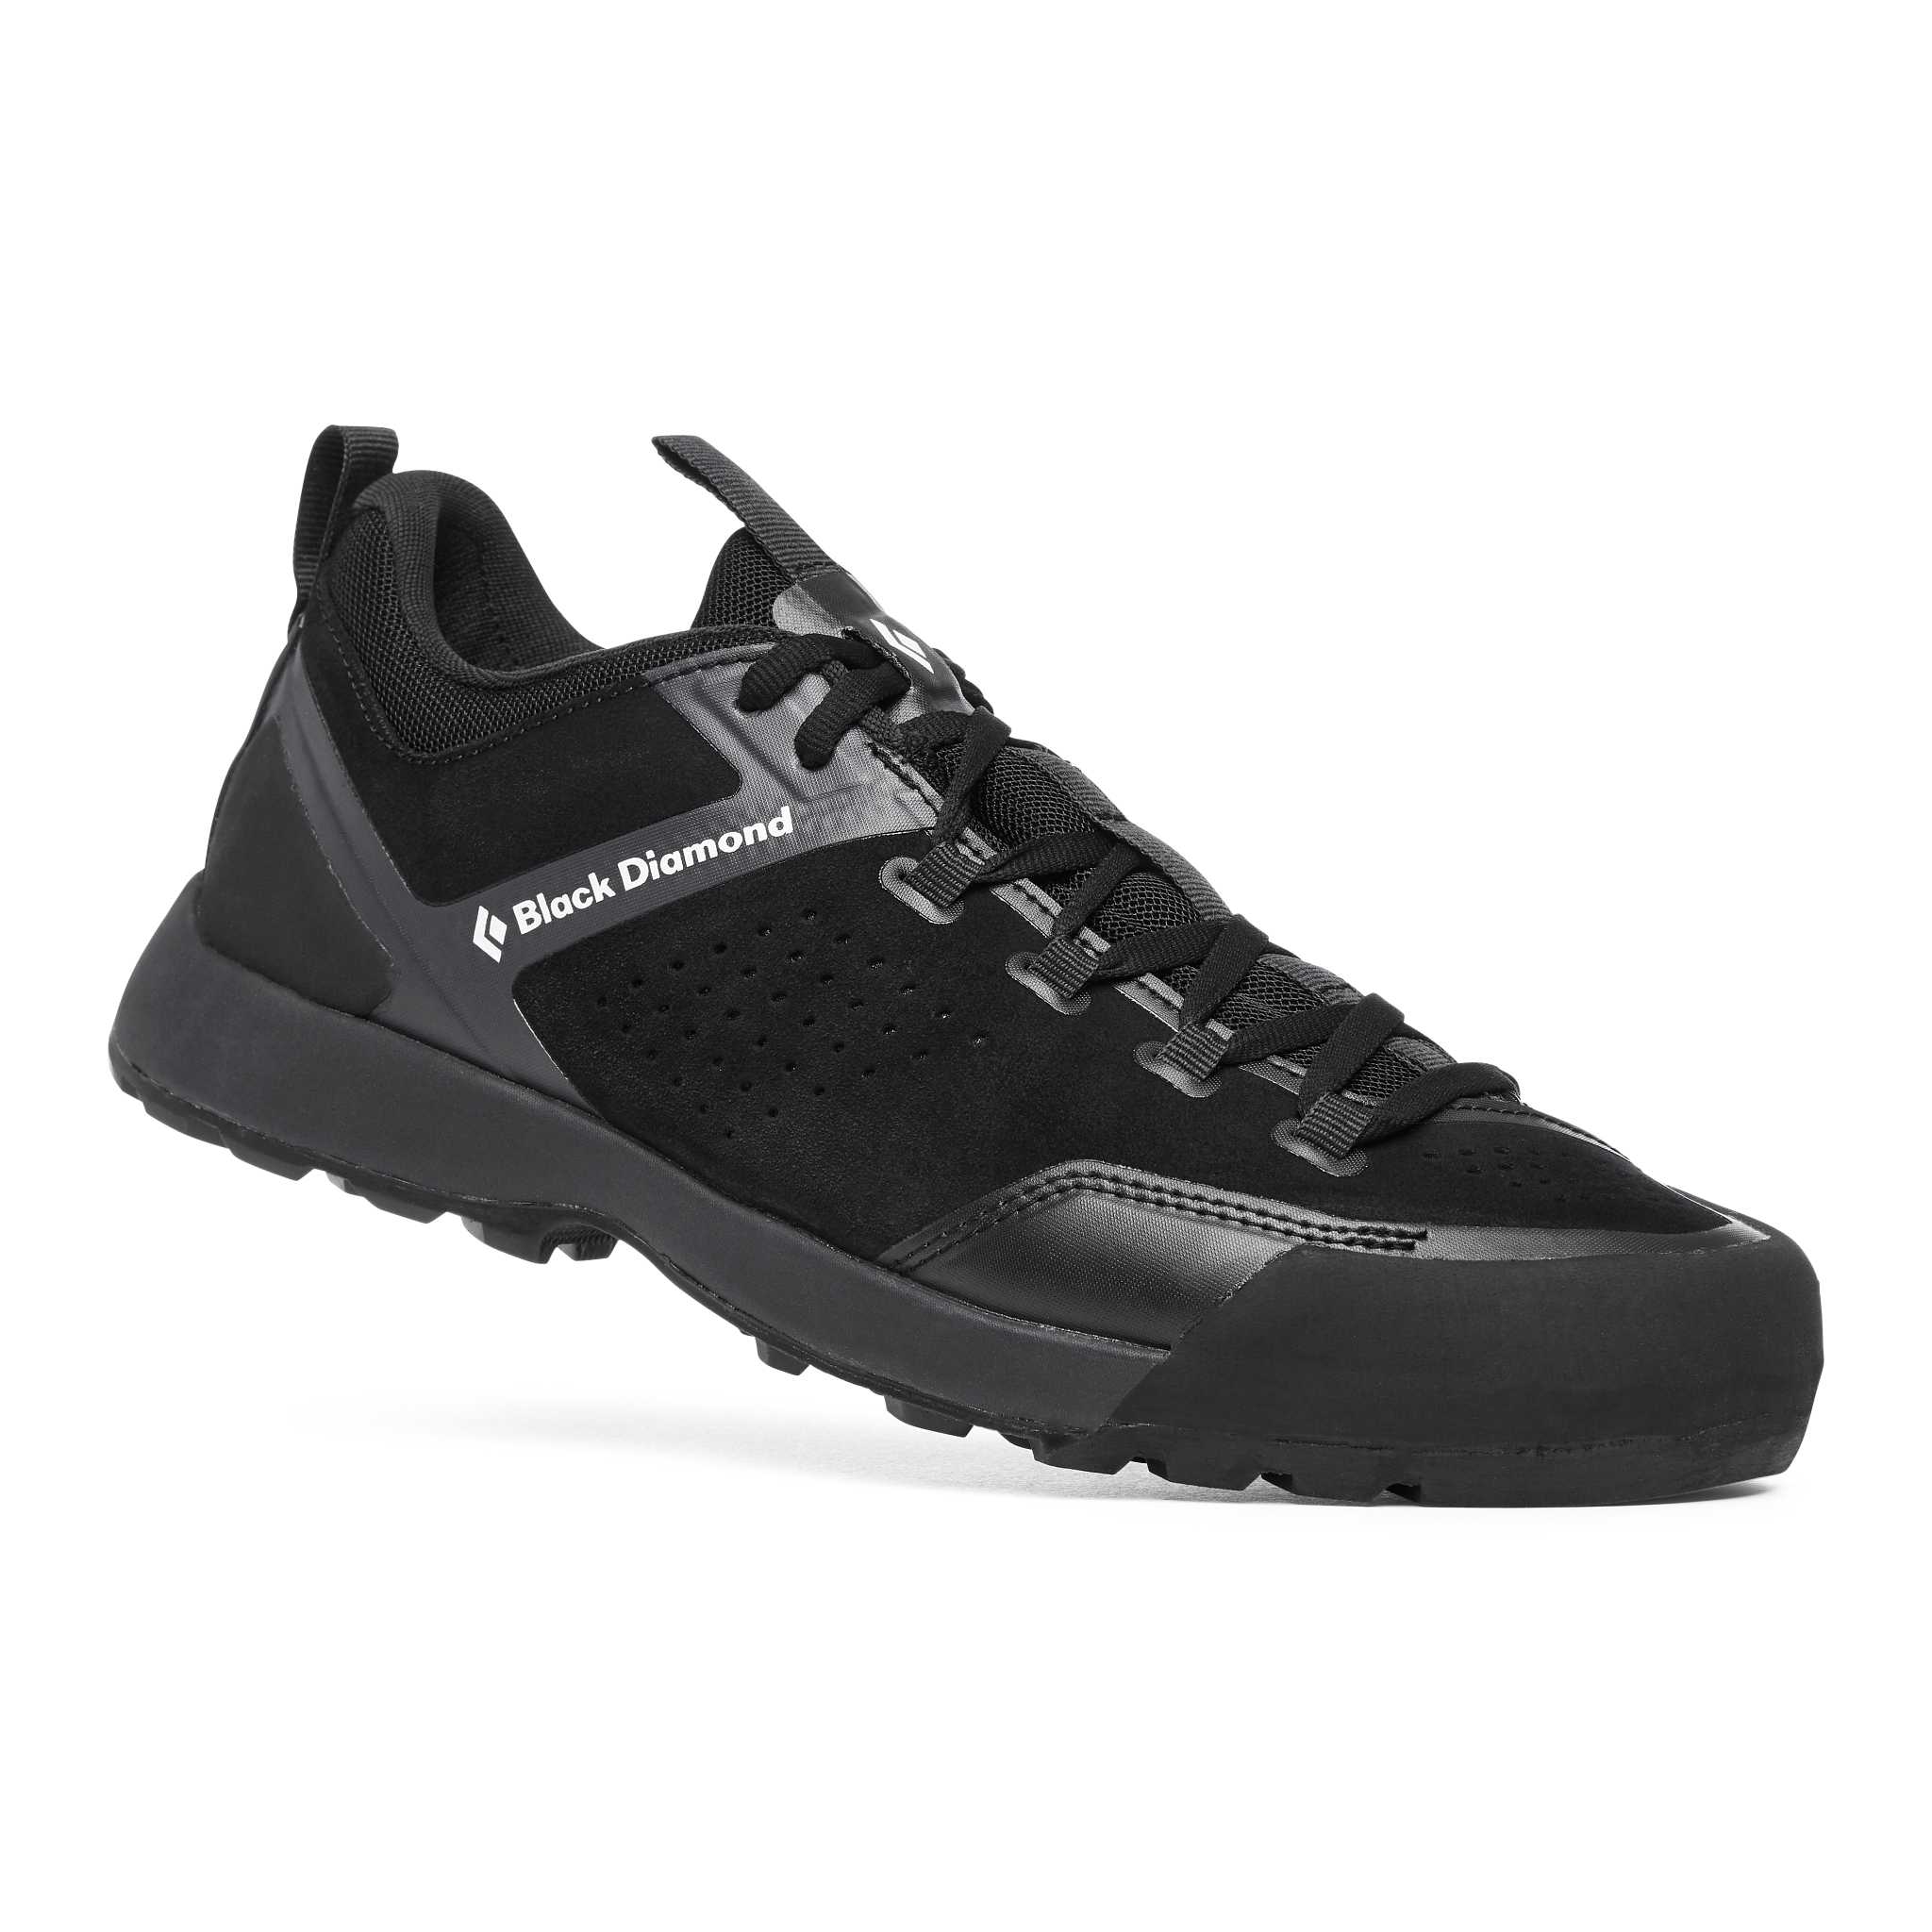 Black Diamond Equipment Men's Mission XP Leather Approach Shoes US 12 Black/Granite